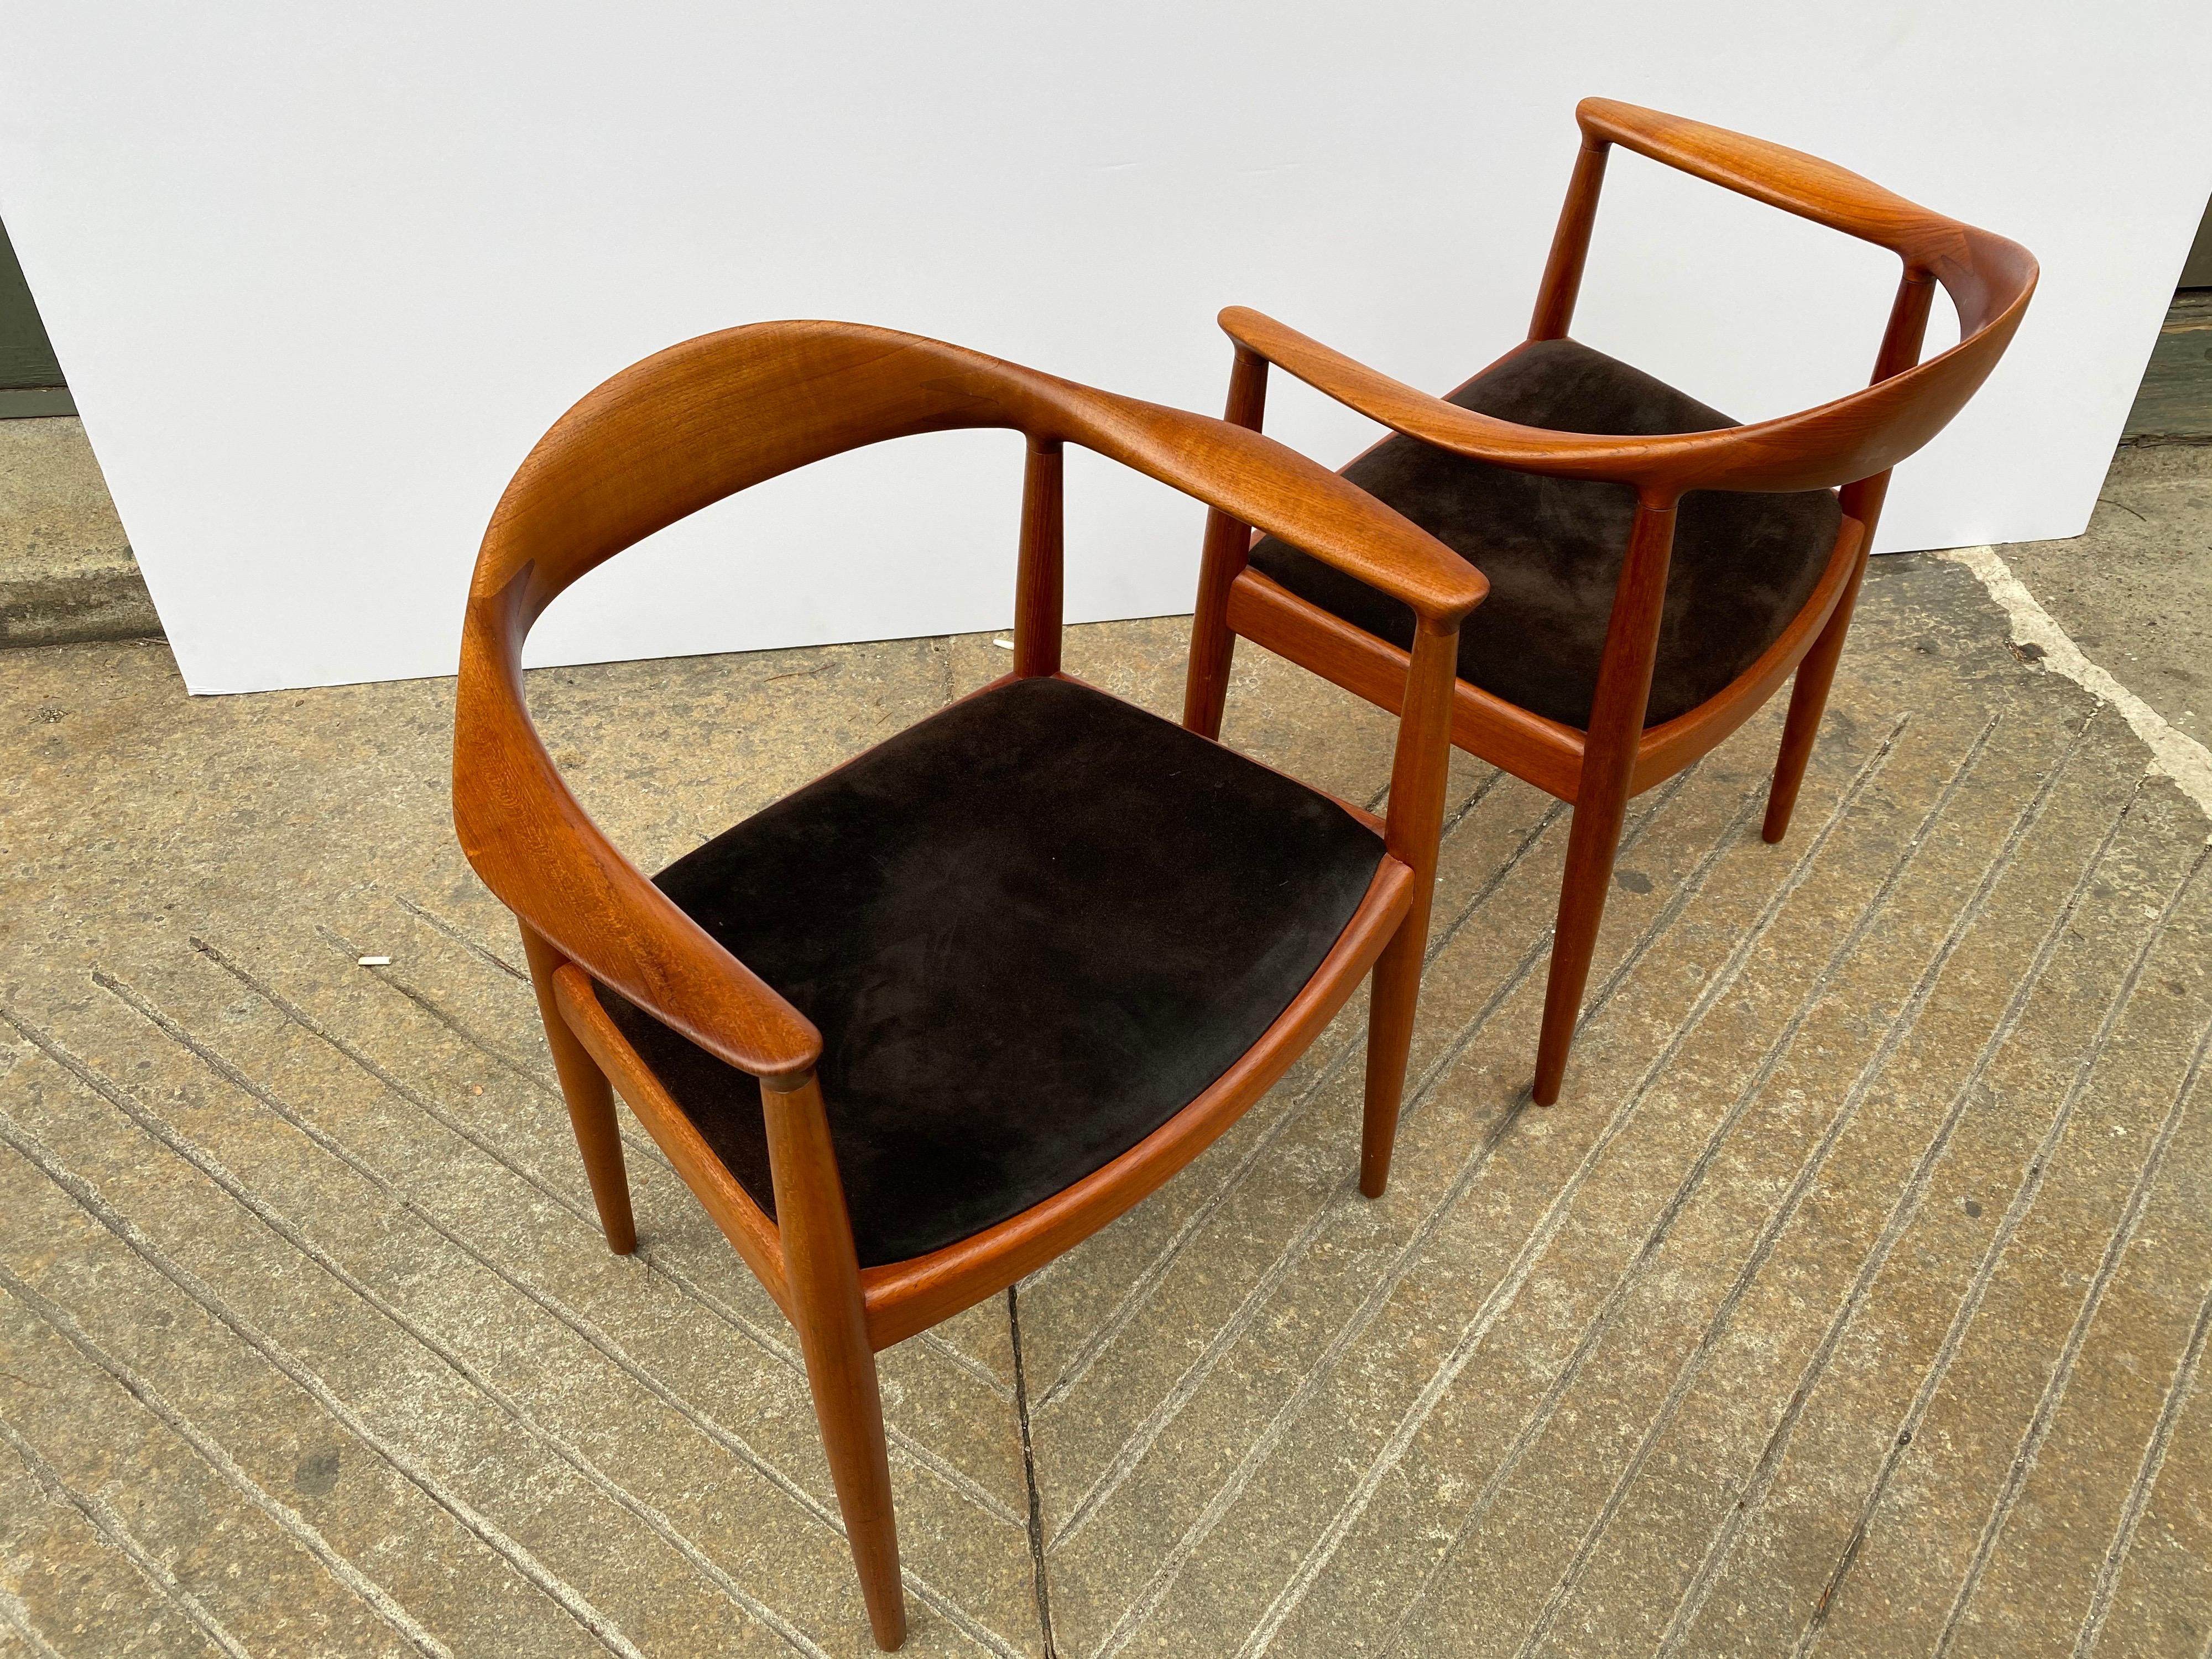 Mid-20th Century Hans Wegner Pair of Round Chairs/ “The Chair” for Johannes Hansen